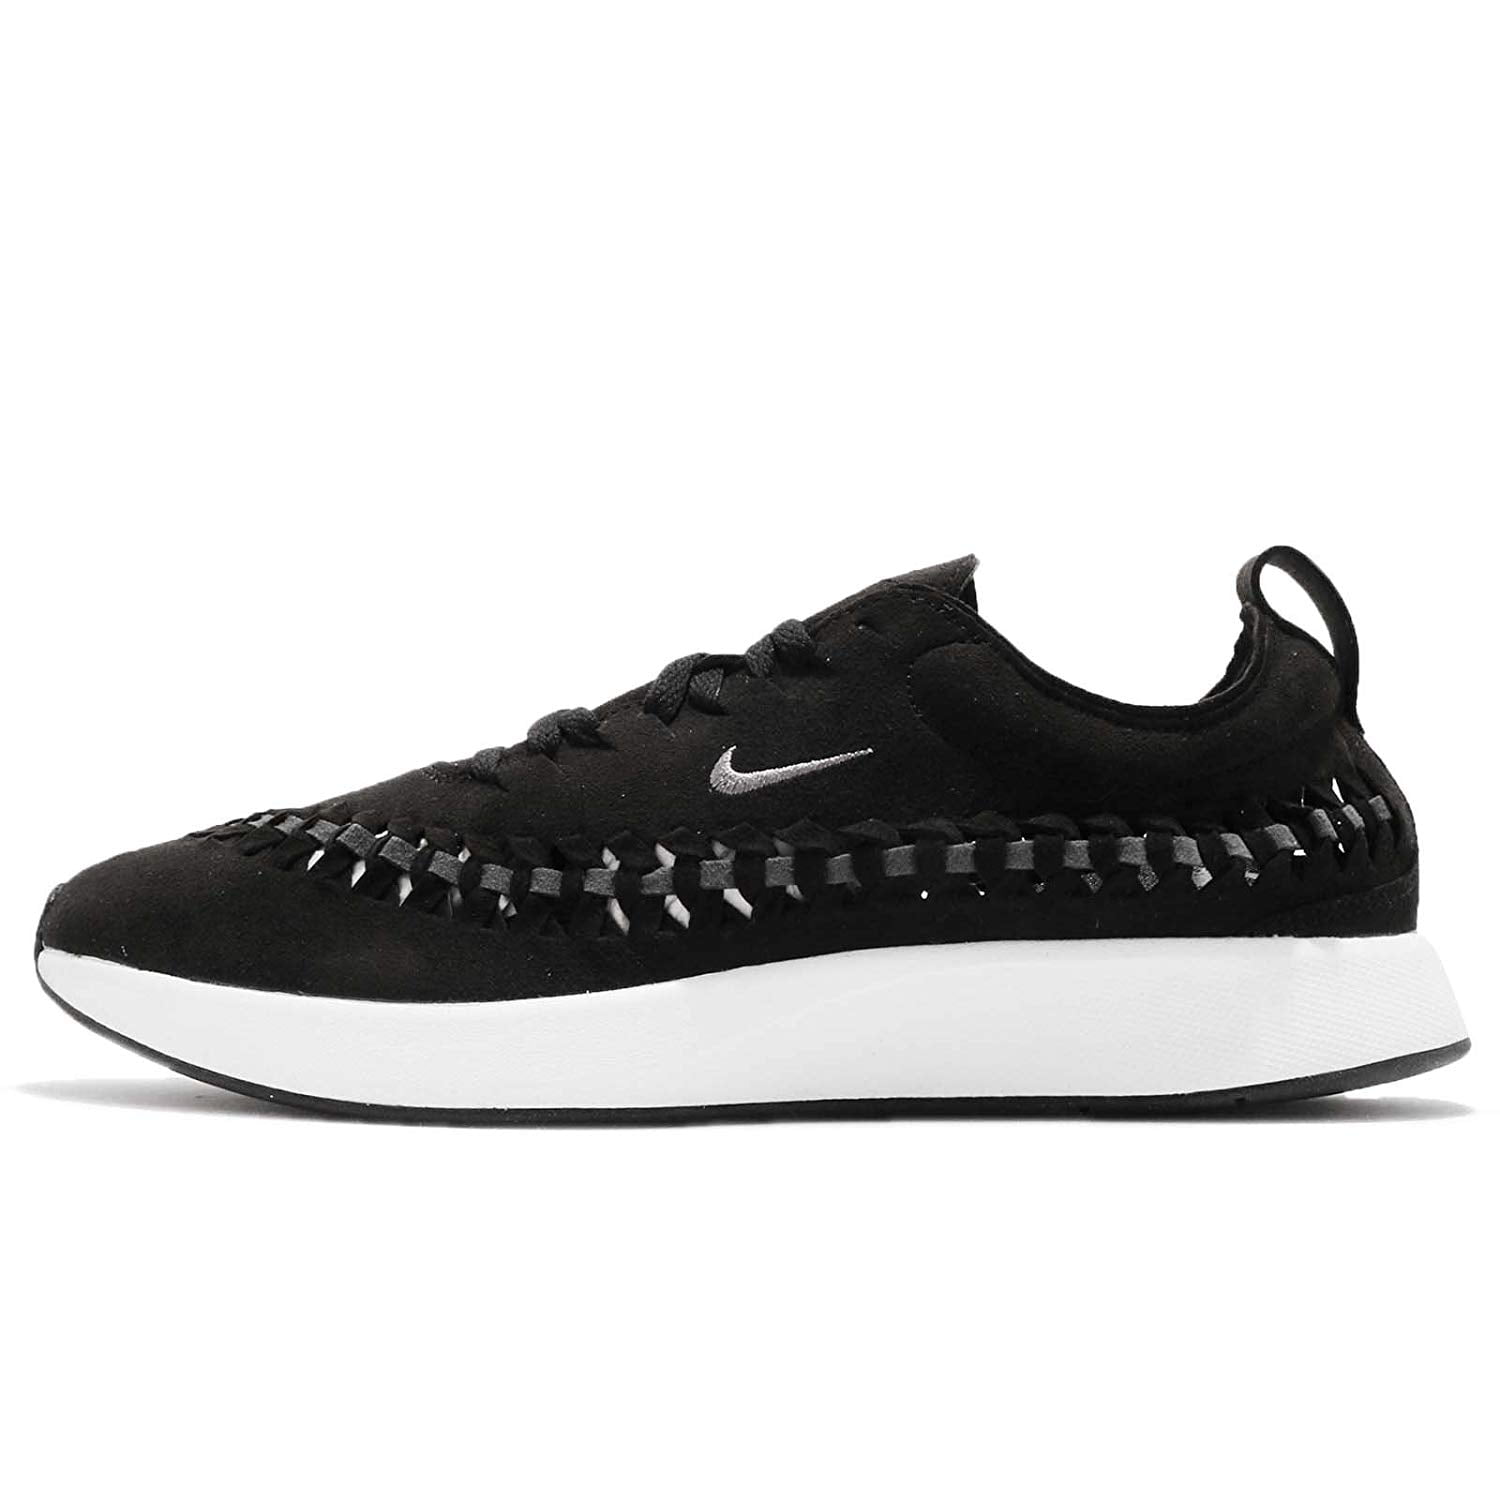 Men's Dualtone Racer Woven Running Shoes (10.5, Black/Dark Grey-white) - Walmart.com